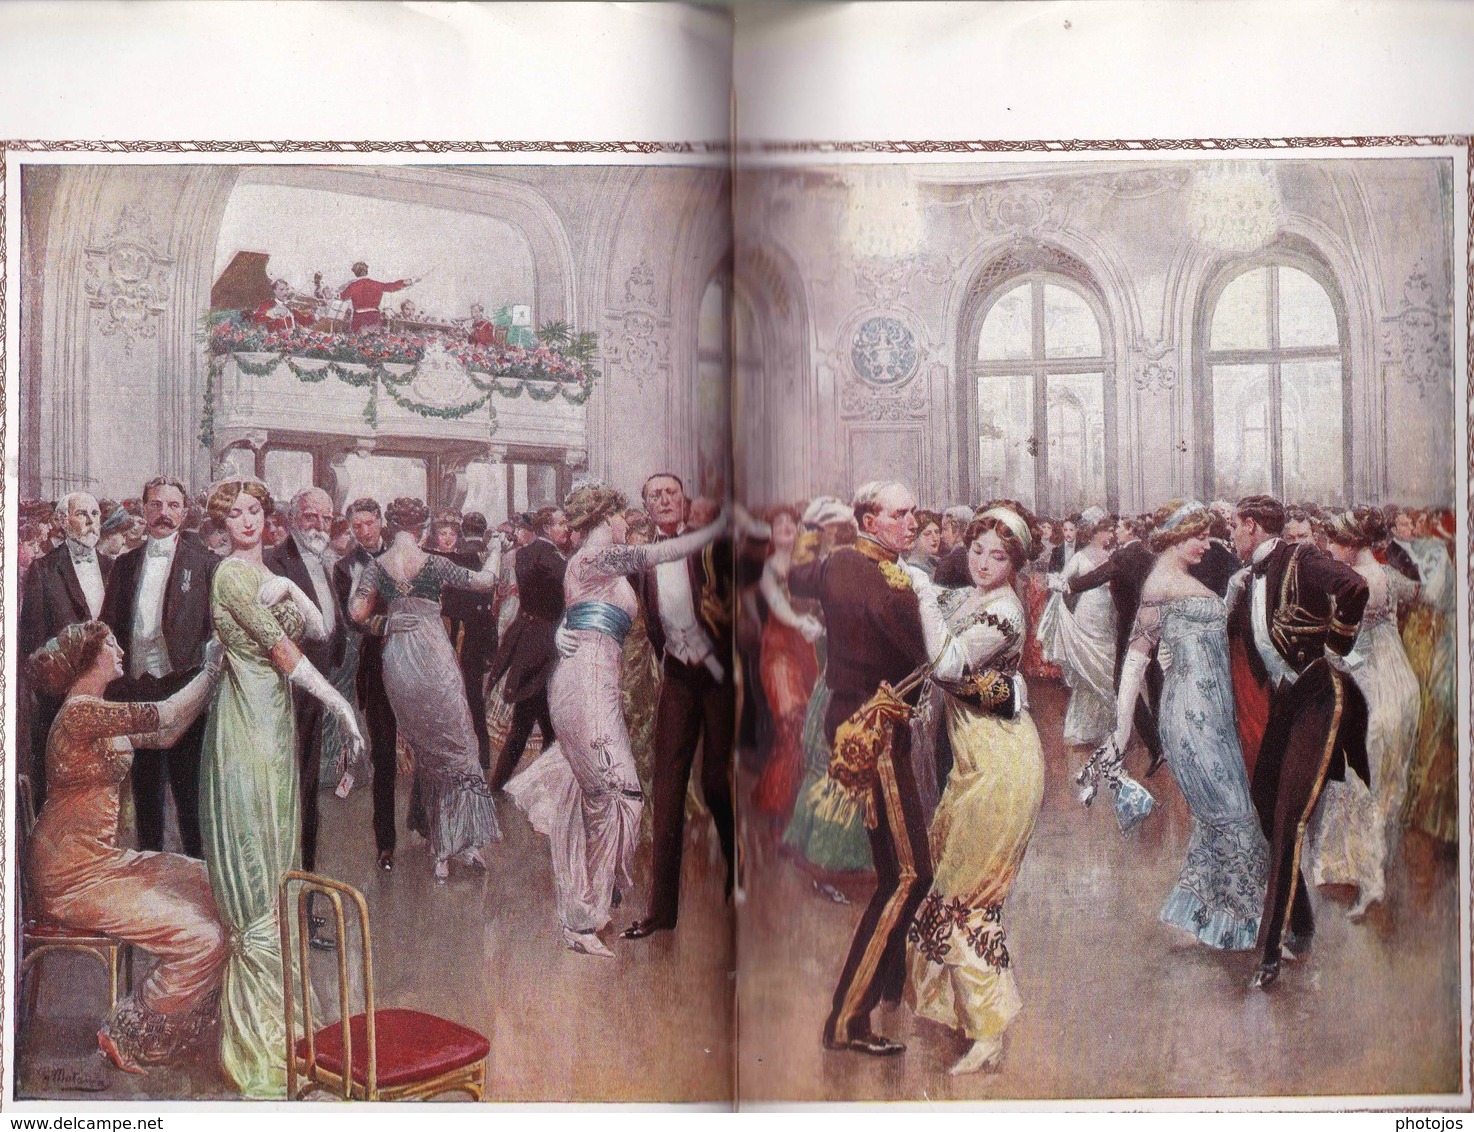 Advertising Book  "The Savoyard" : Savoy Palace, Claridge's, Berkeley, 84 P. 75 Illustrations  Schweppes - Non Classés